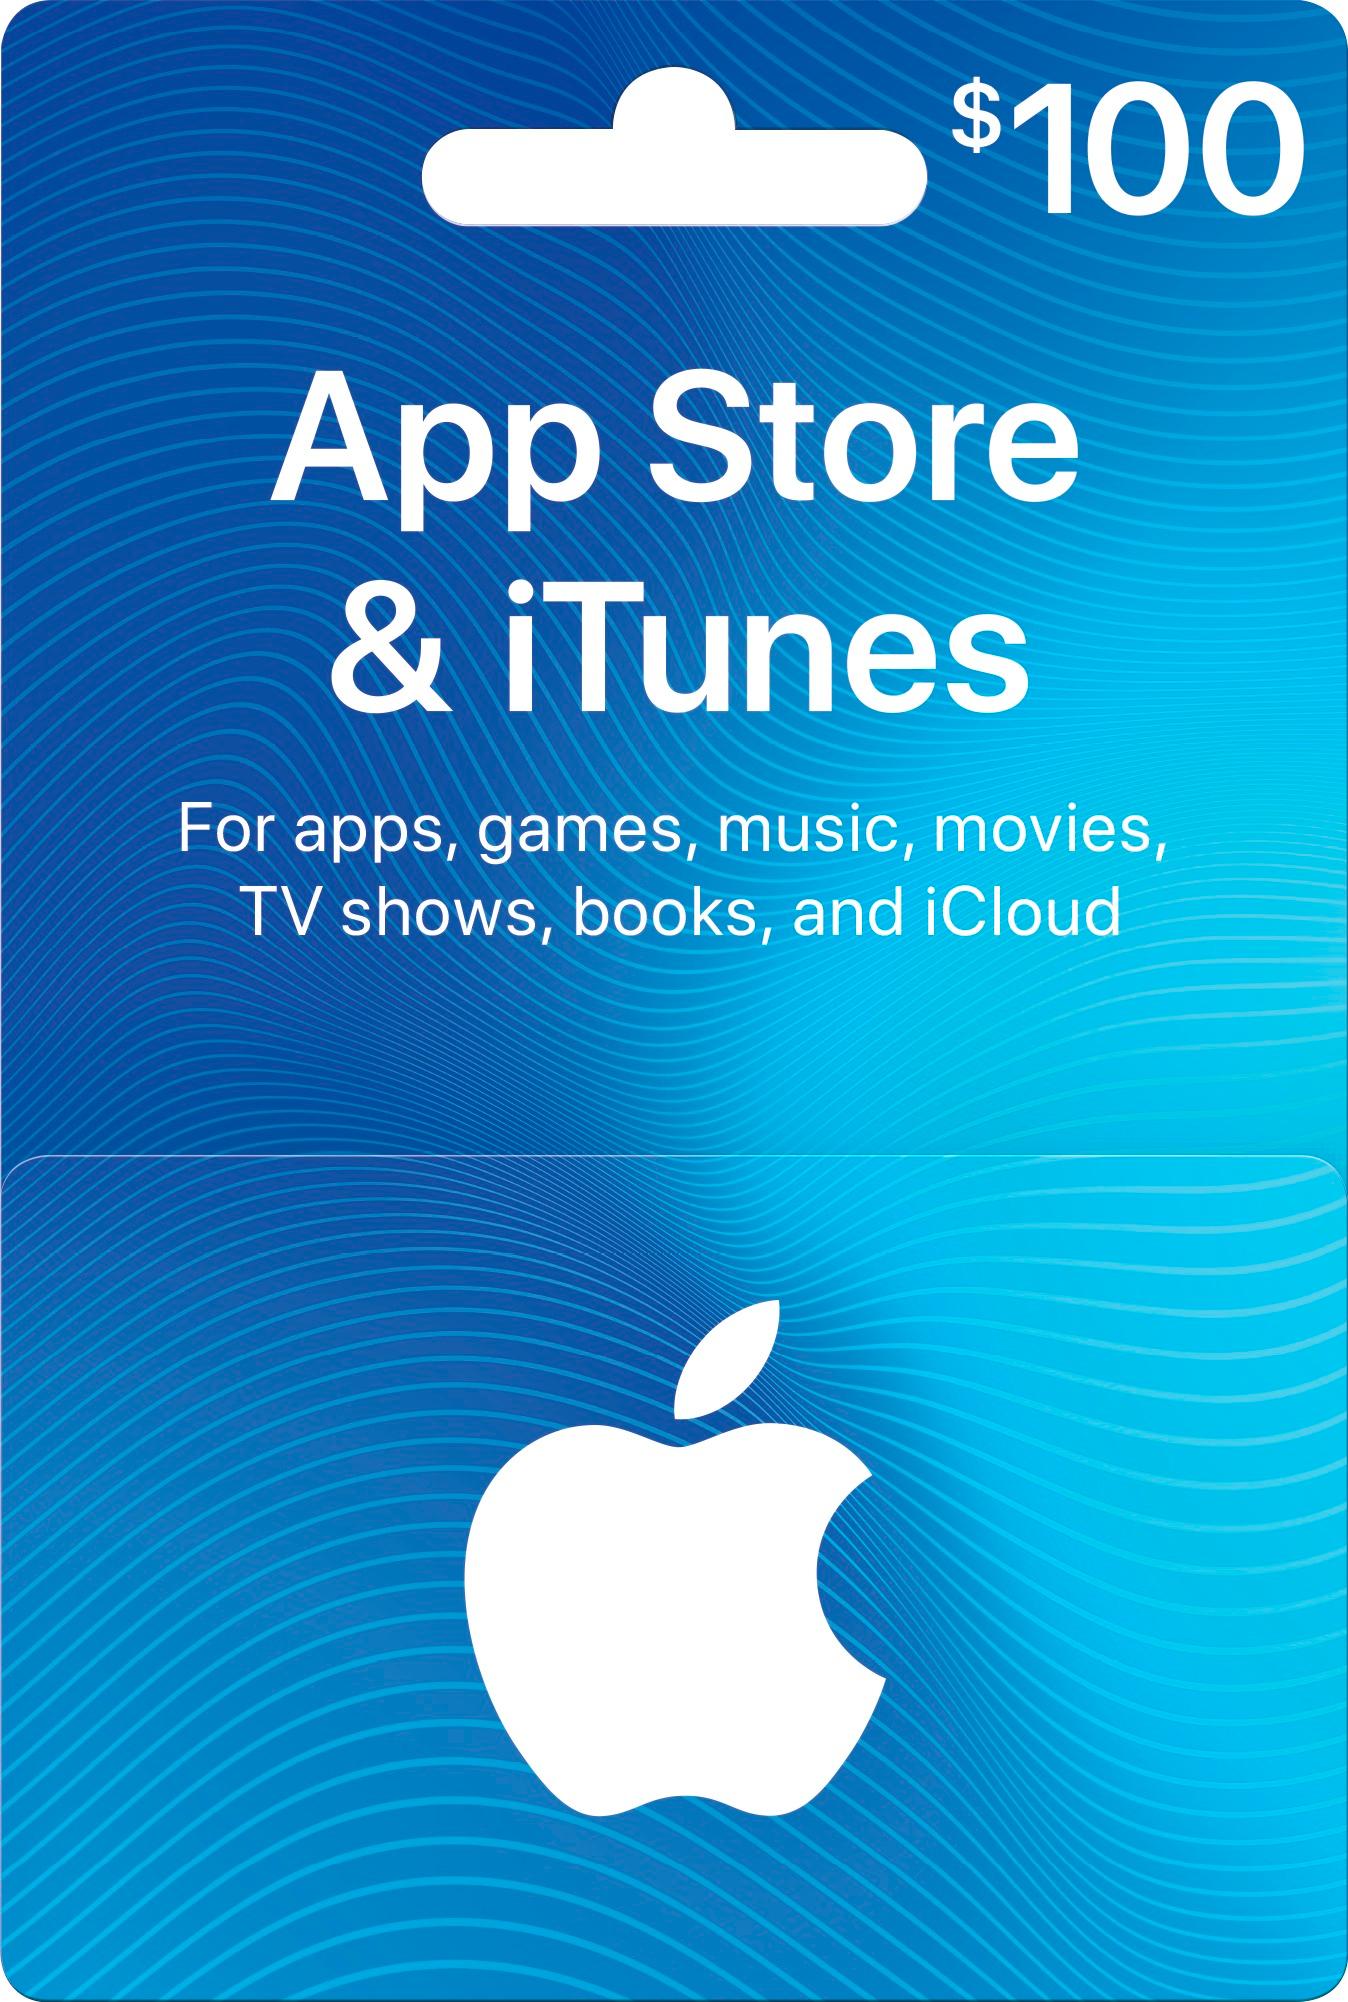 Rodeo Snoep Waakzaamheid Apple $100 App Store & iTunes Gift Card ITUNES 0114 $100 - Best Buy